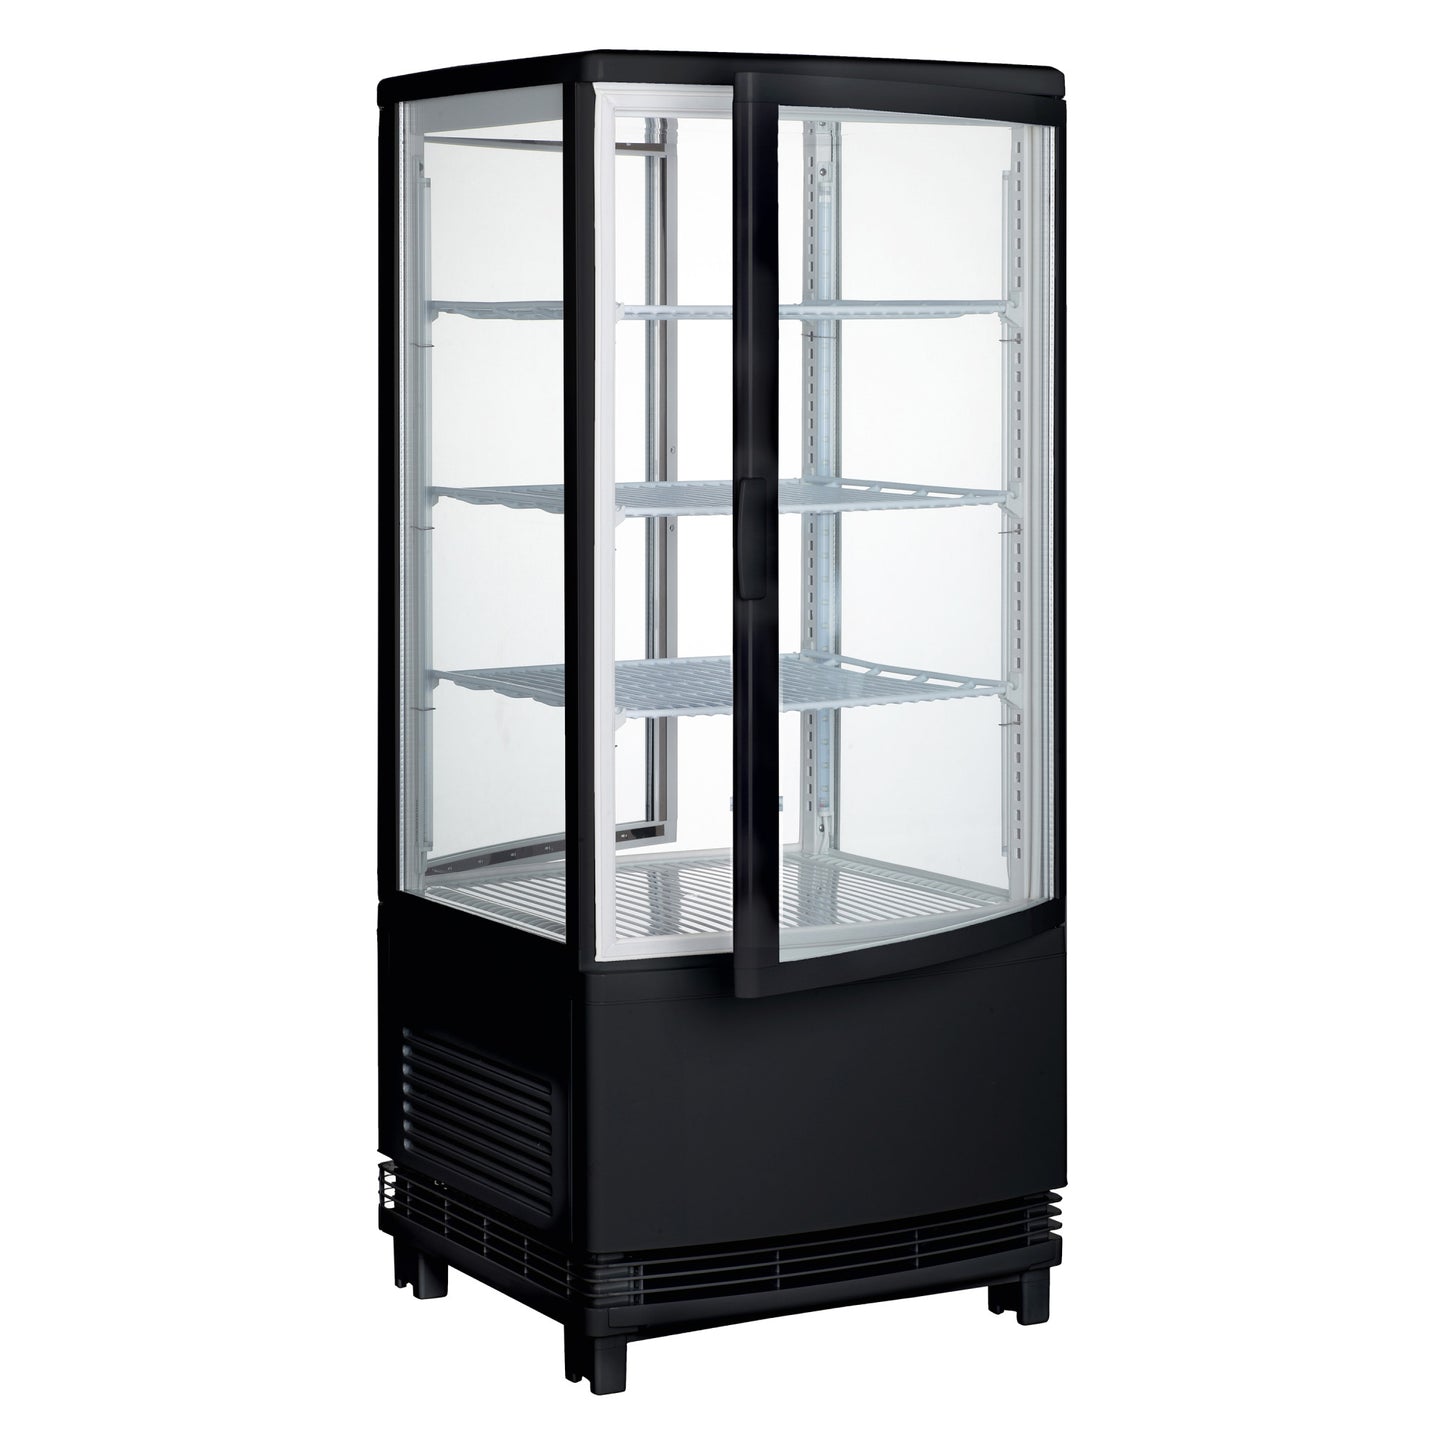 CRD-1K - Countertop Refrigerated Beverage Display - Black